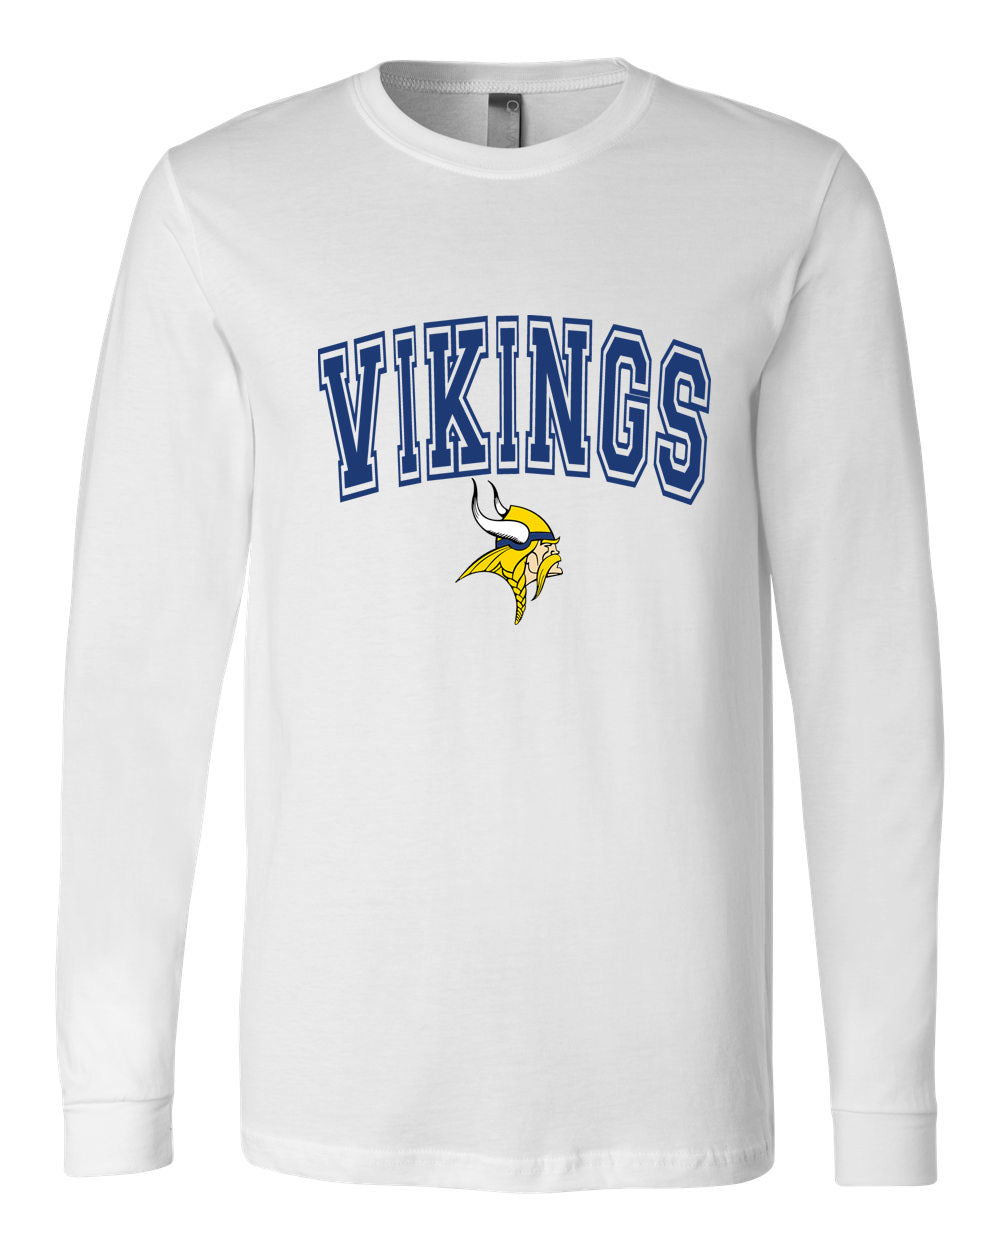 VTHS design 21 Long Sleeve Shirt